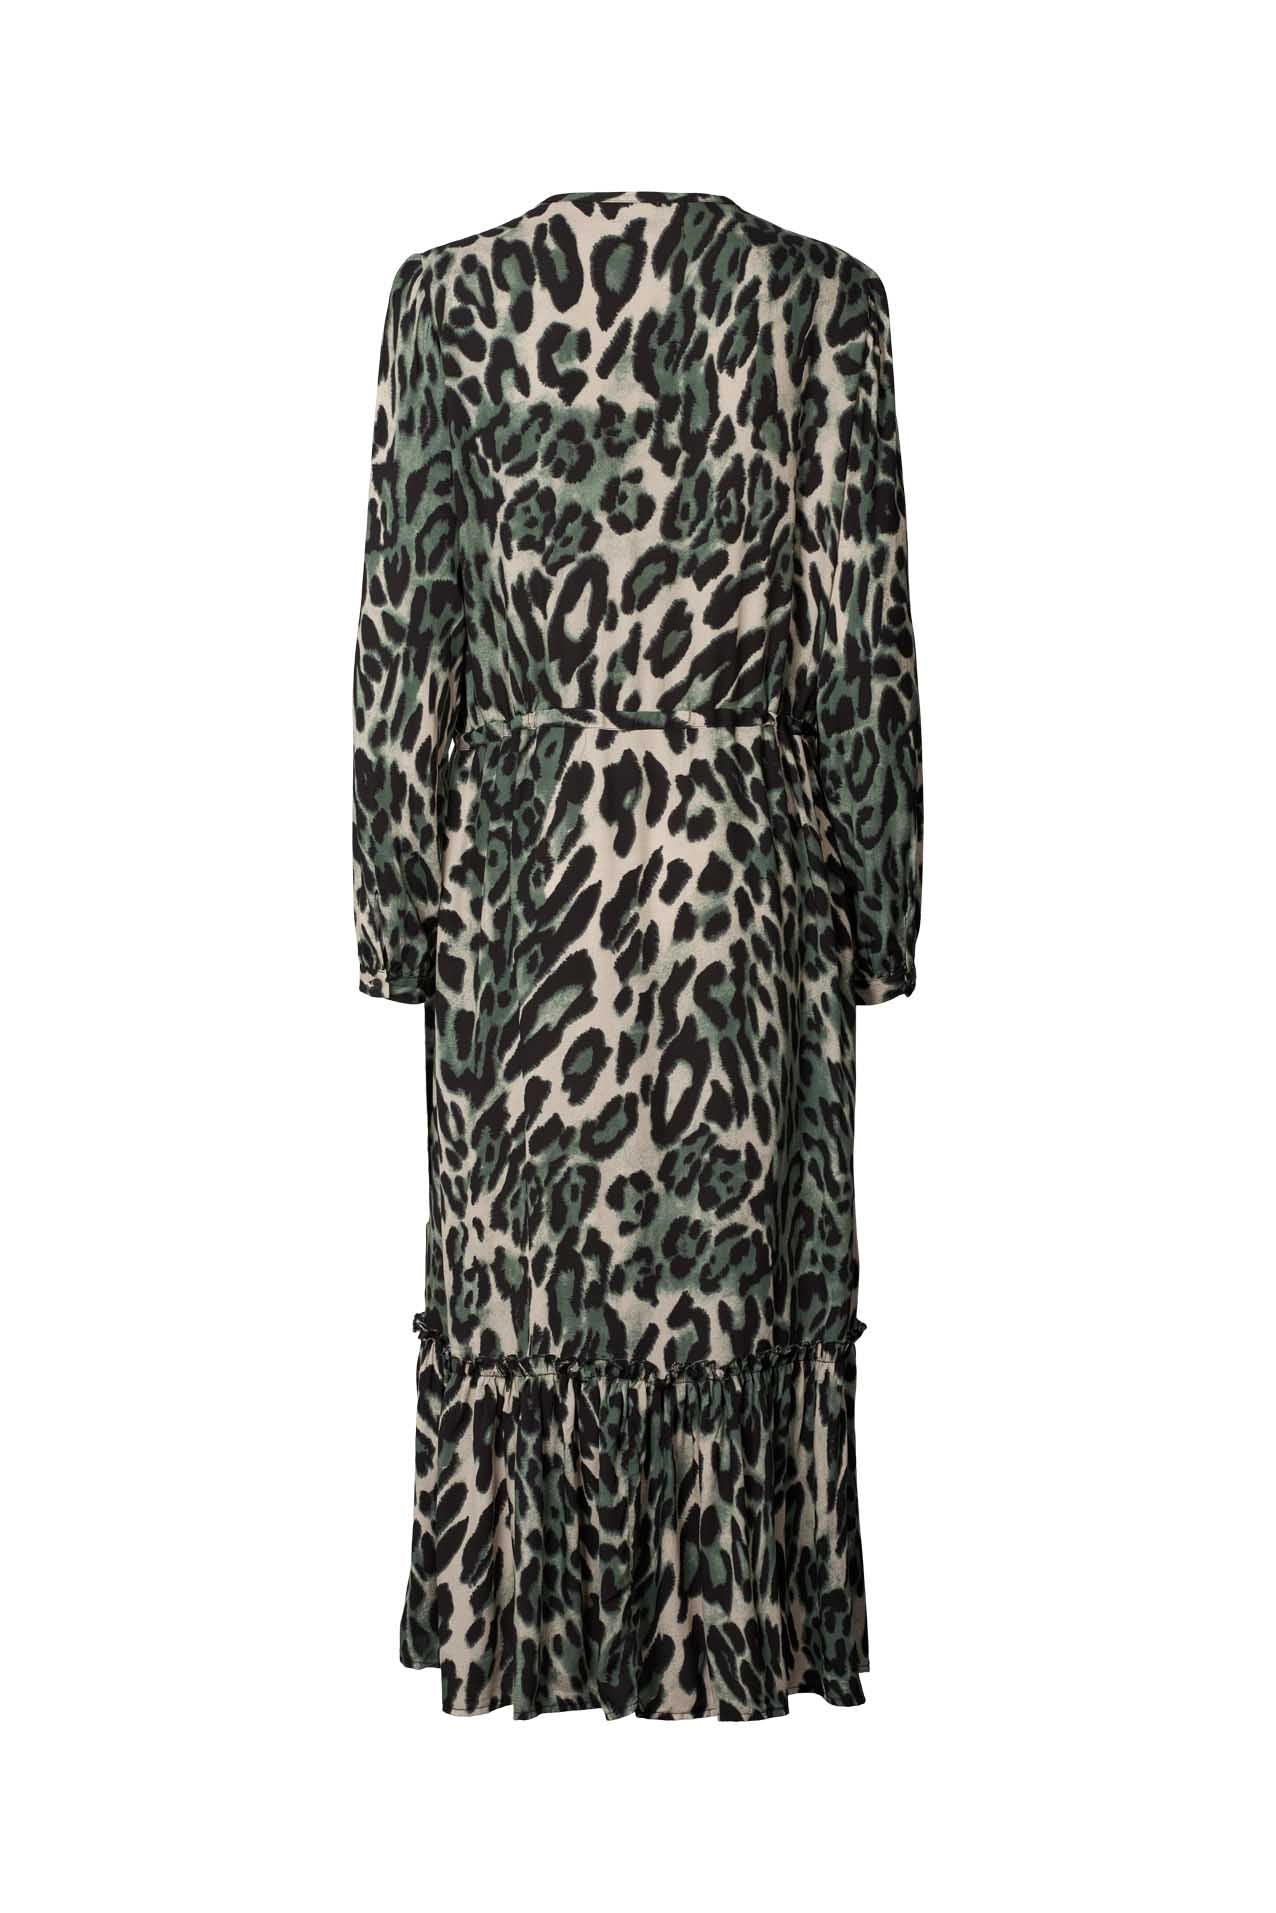 Anastacia Dress | Leopard